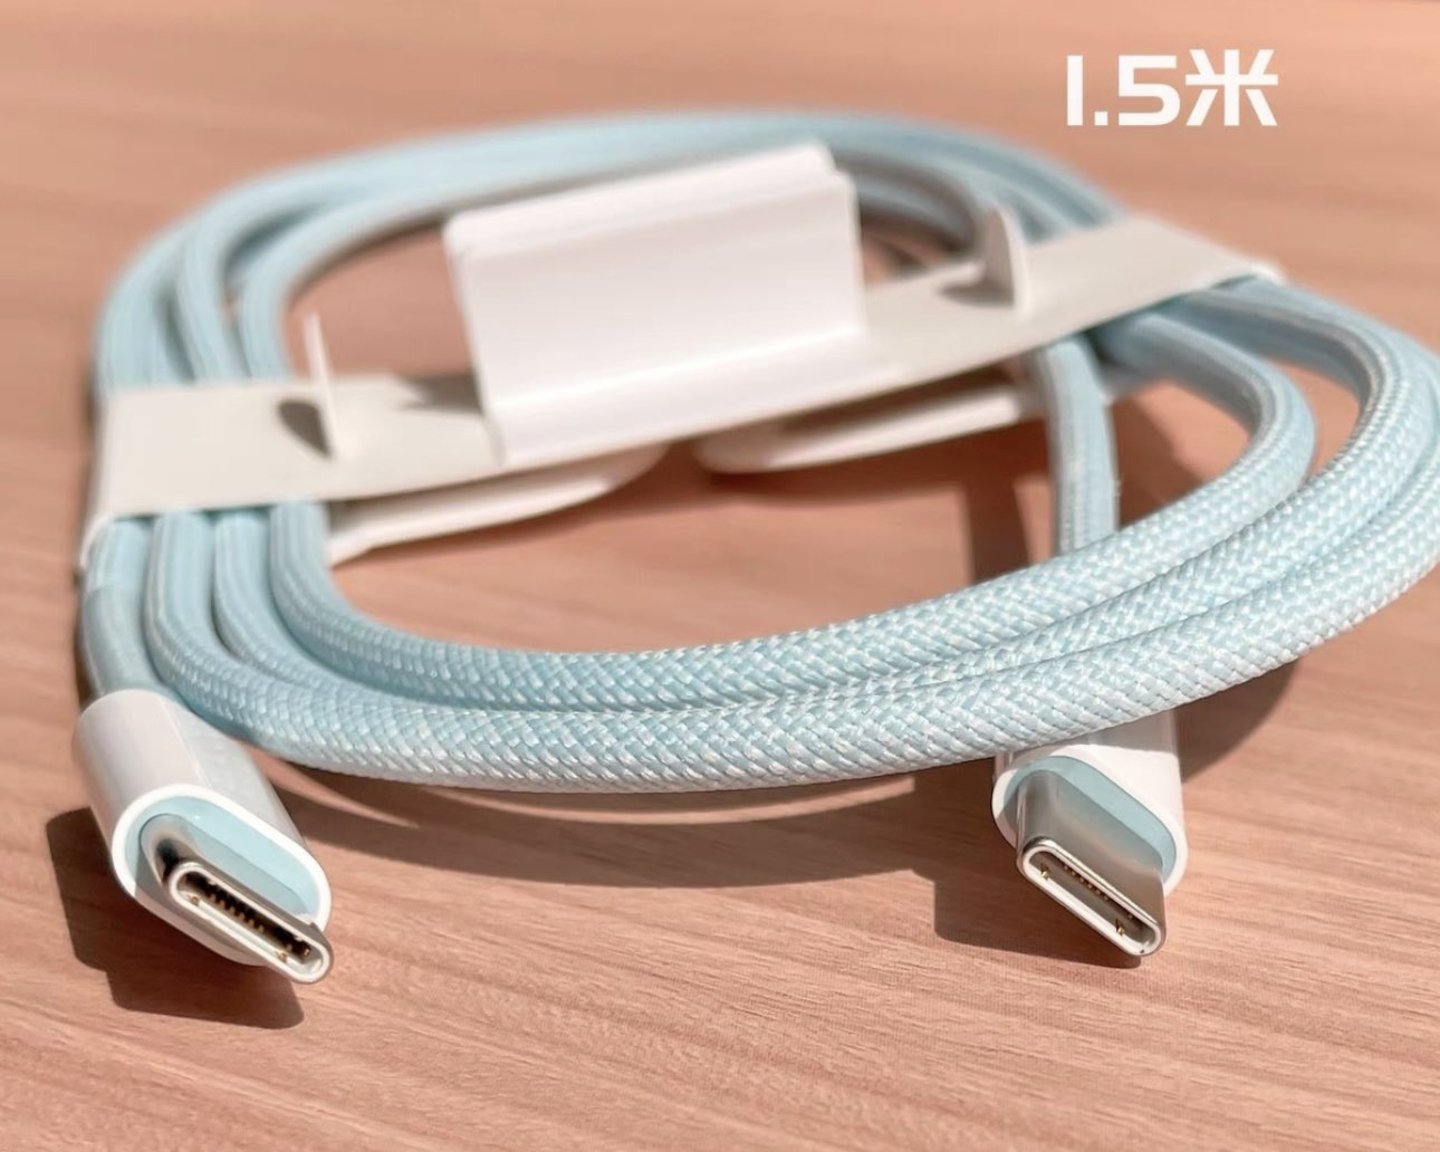 Nuevo cable del iPhone 15